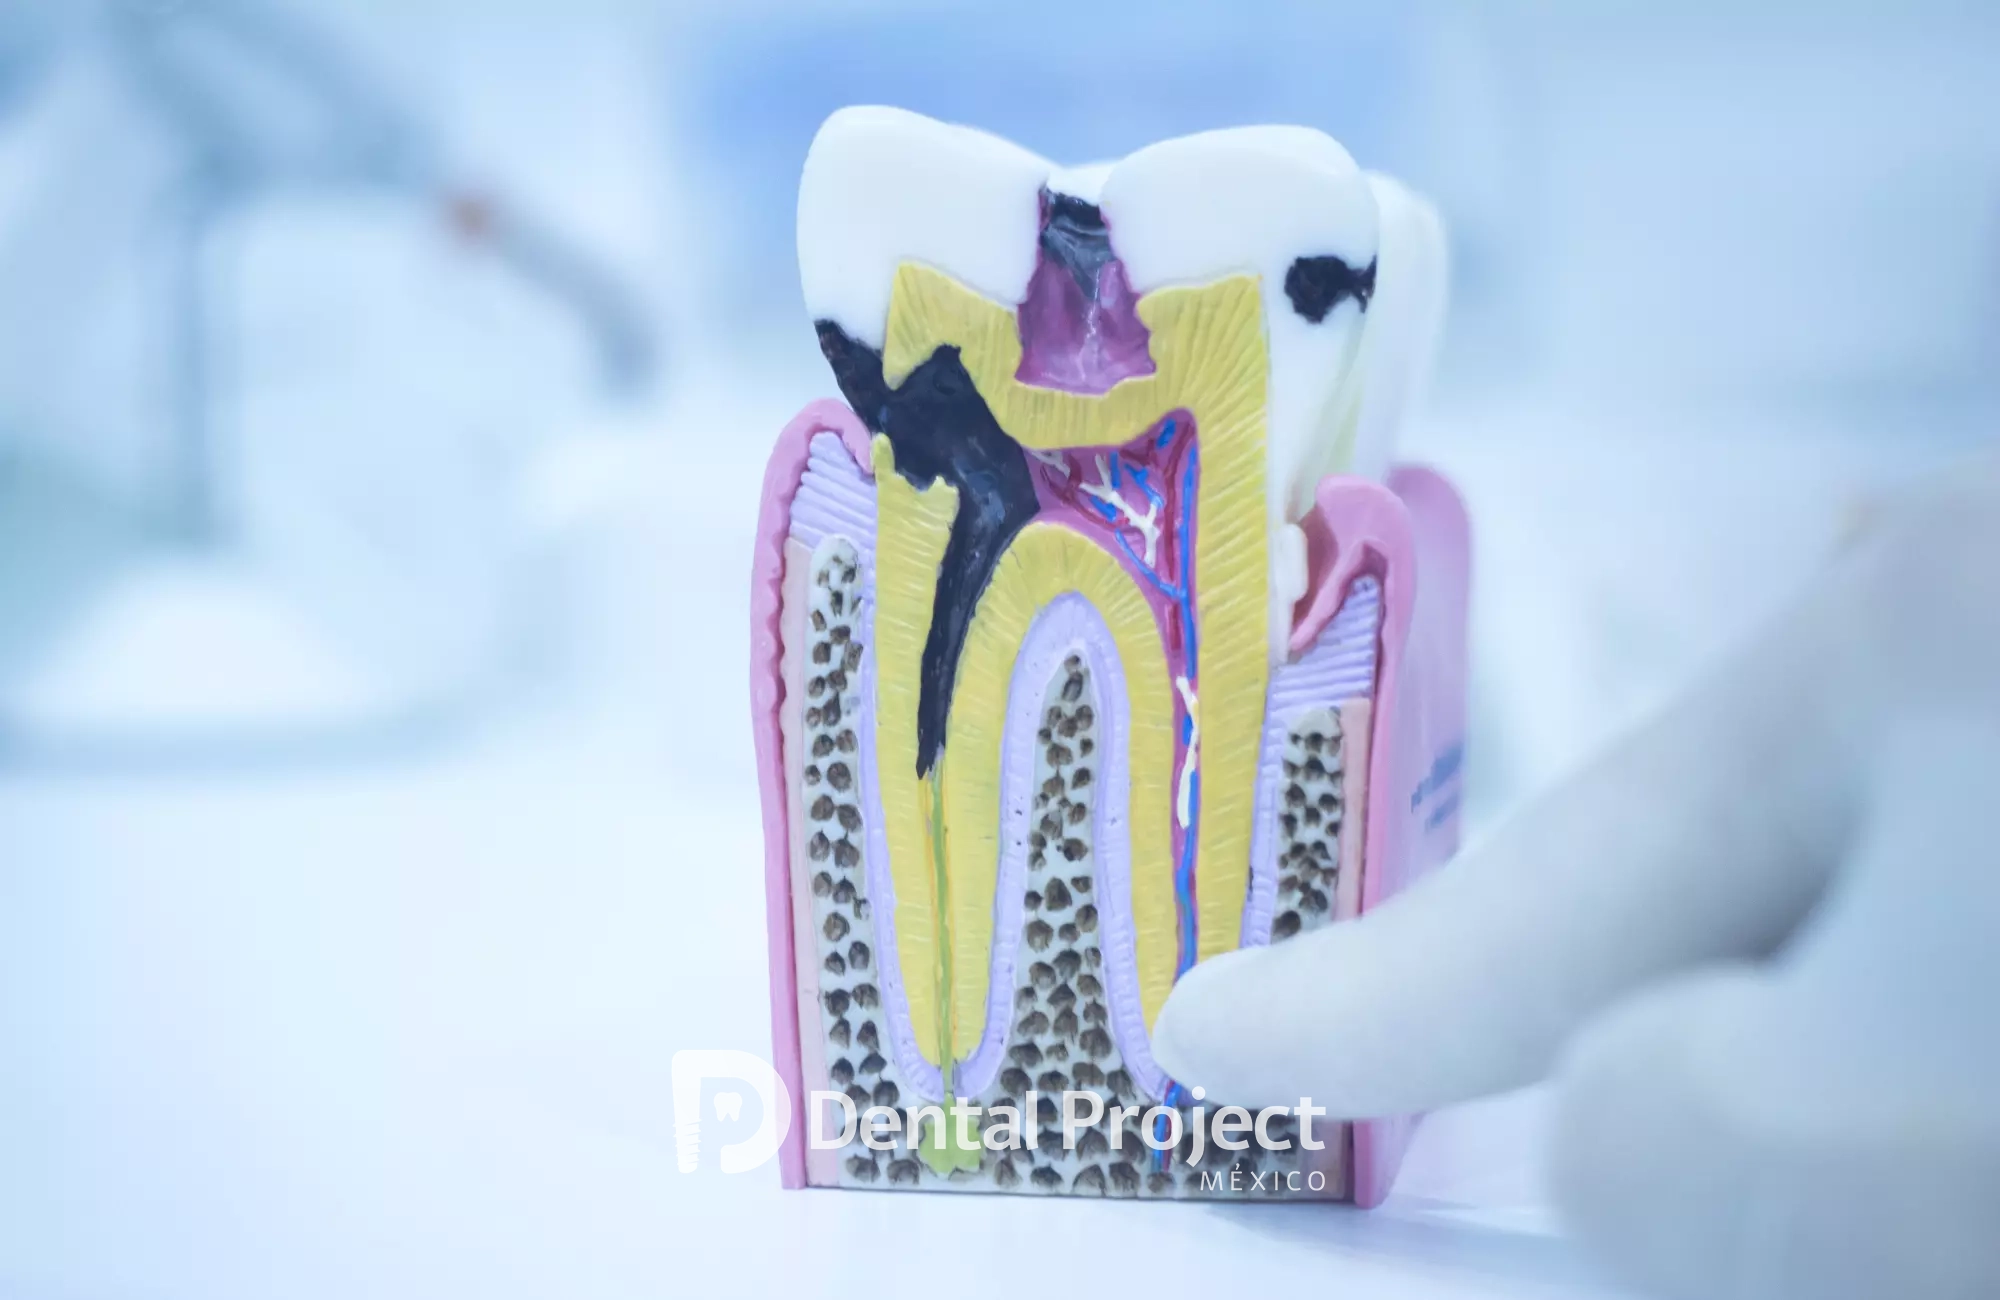 Dental Project Mexico Endodontics.